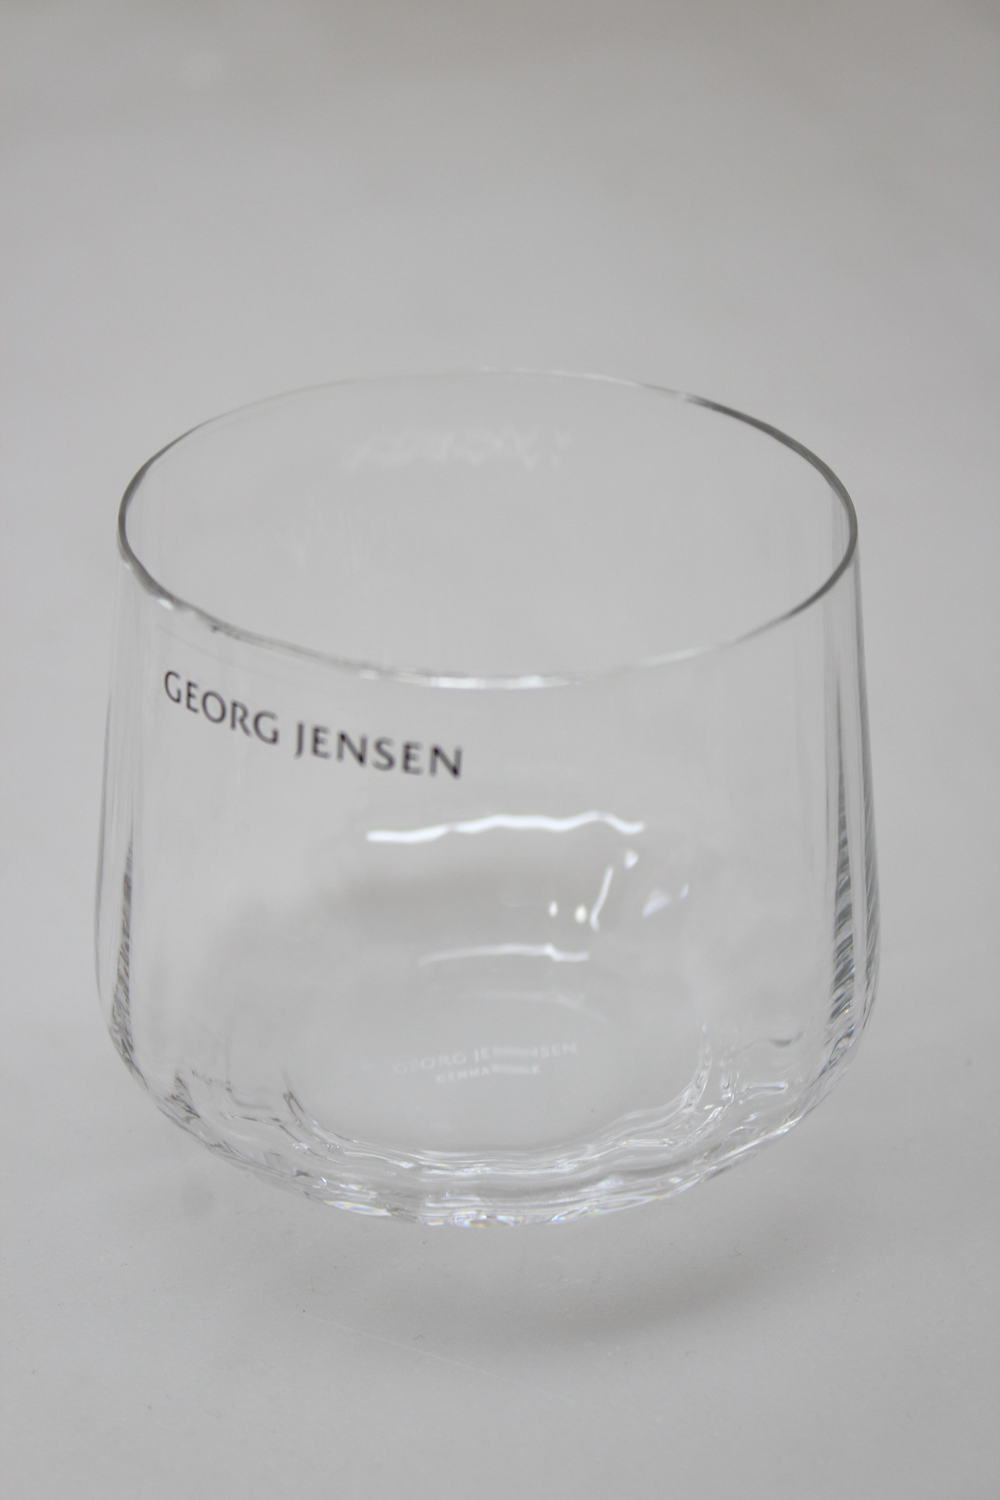 Georg Jensen Bernadotte Trinkglas Wasserglas Saftglas Design Glas 250 ml 6er Set